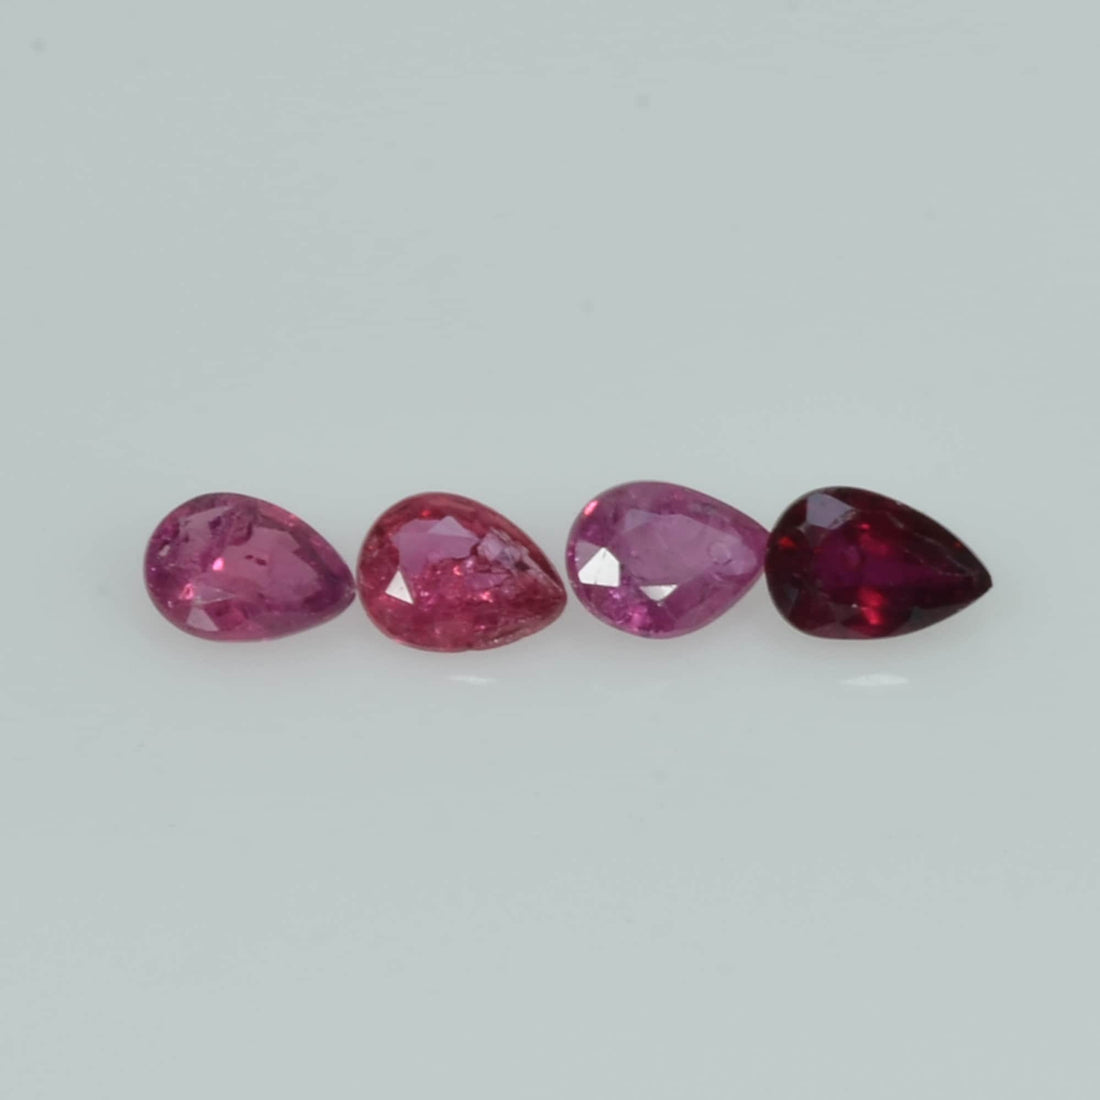 4x3 mm Natural Ruby Loose Gemstone Pear Cut